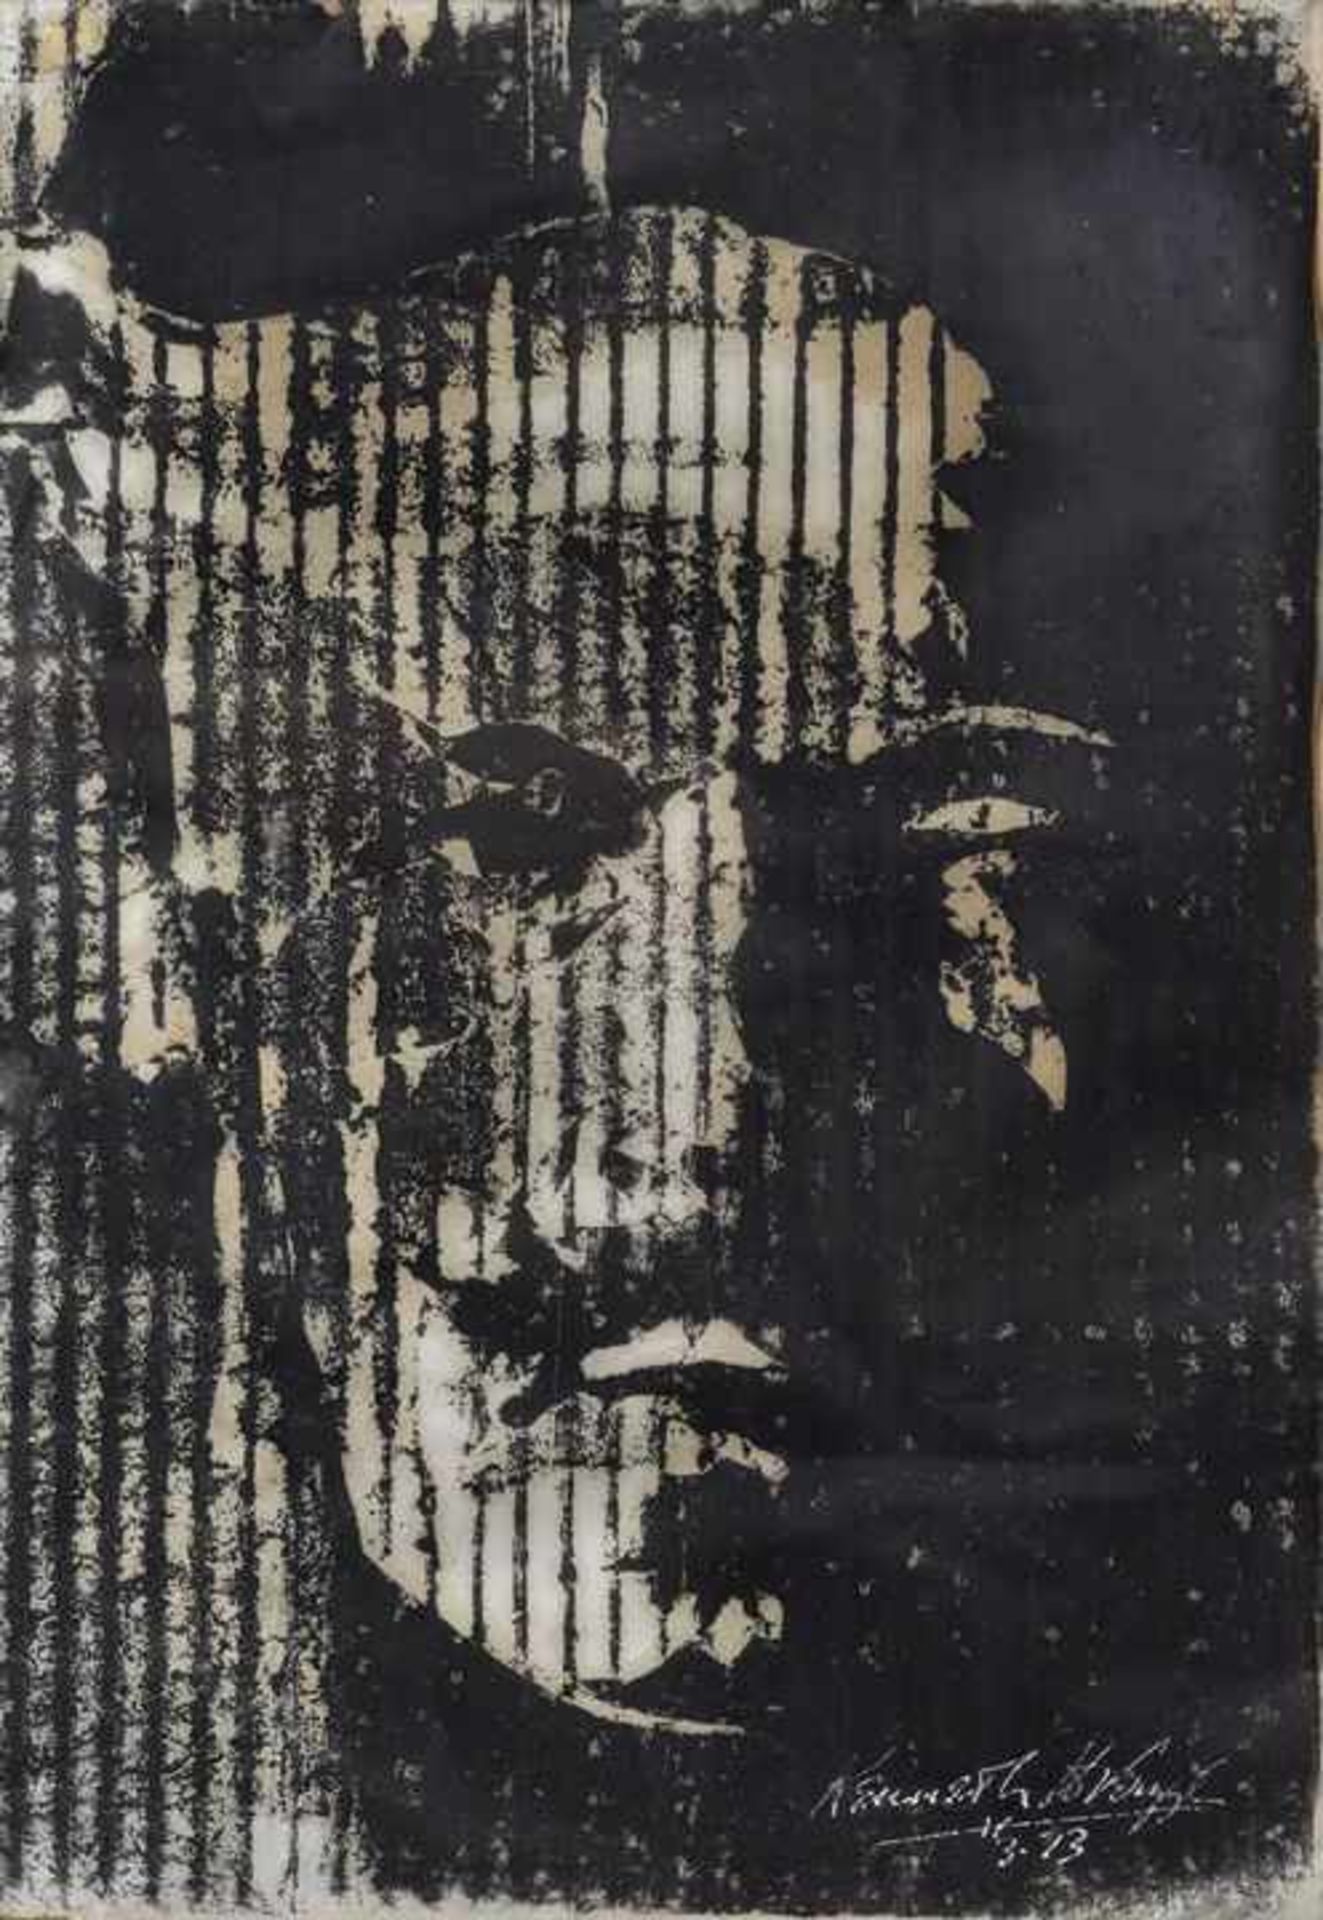 Verzyl, Kenneth H. "Pallikary" (Bildnis). 1973. Siebdruck, sign., dat. "11-3-73". 32,5 x 23 cm.